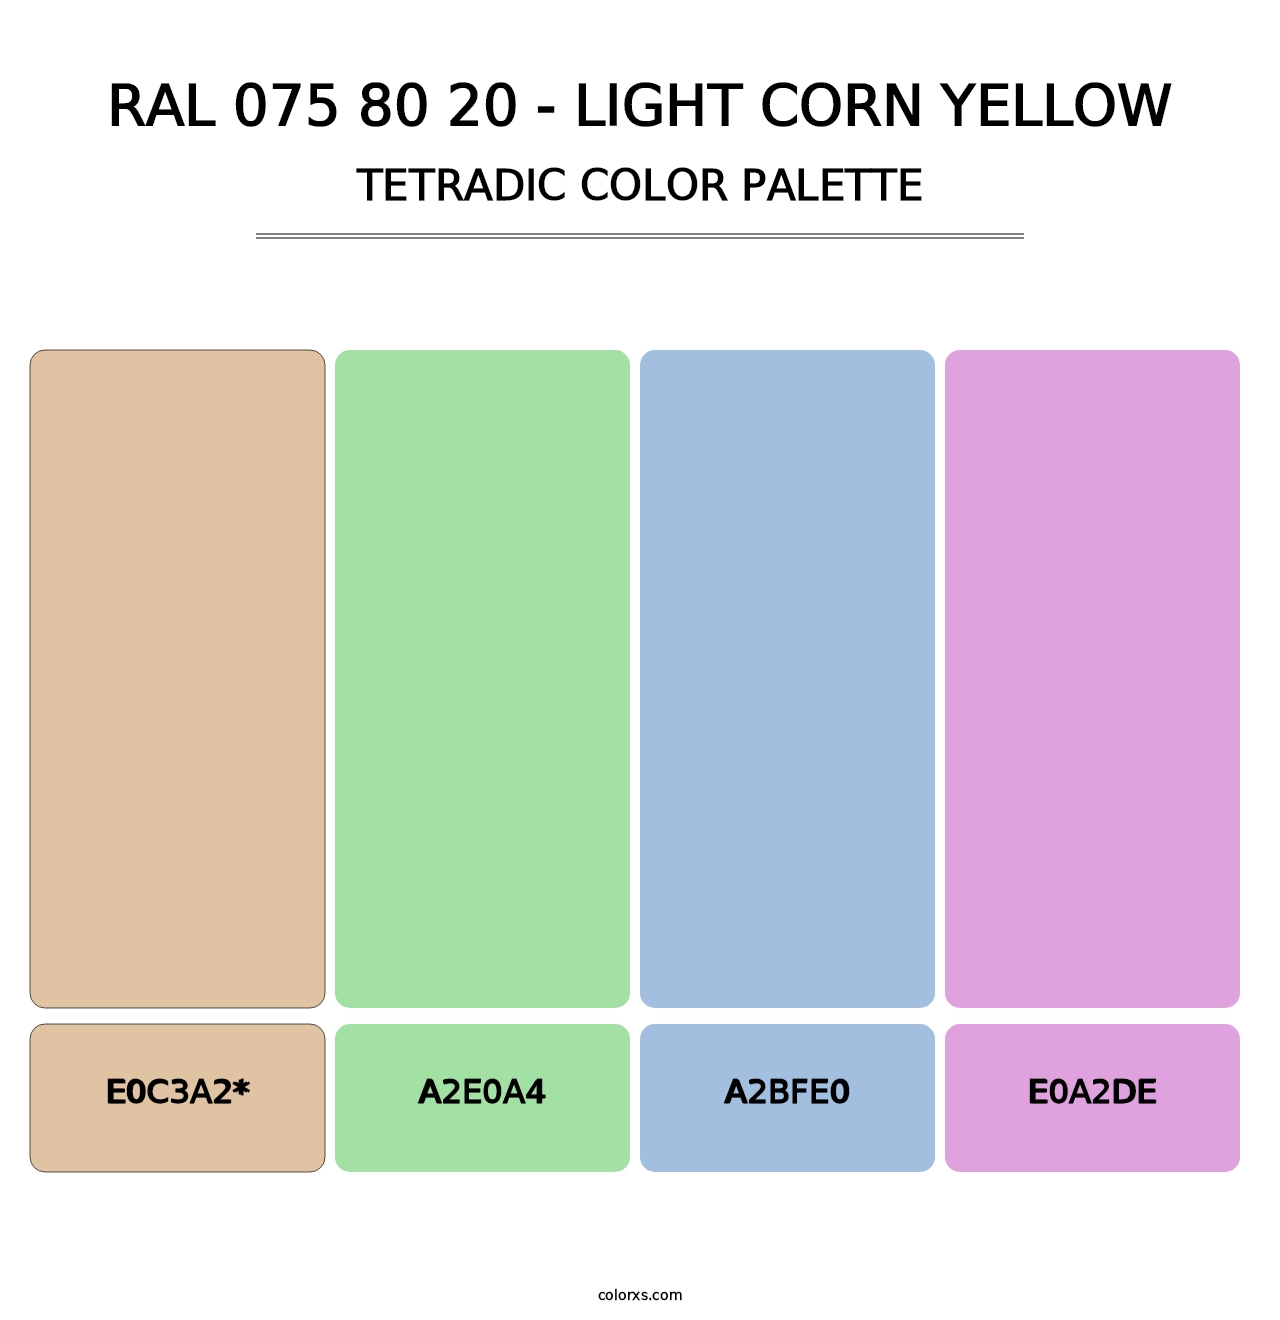 RAL 075 80 20 - Light Corn Yellow - Tetradic Color Palette